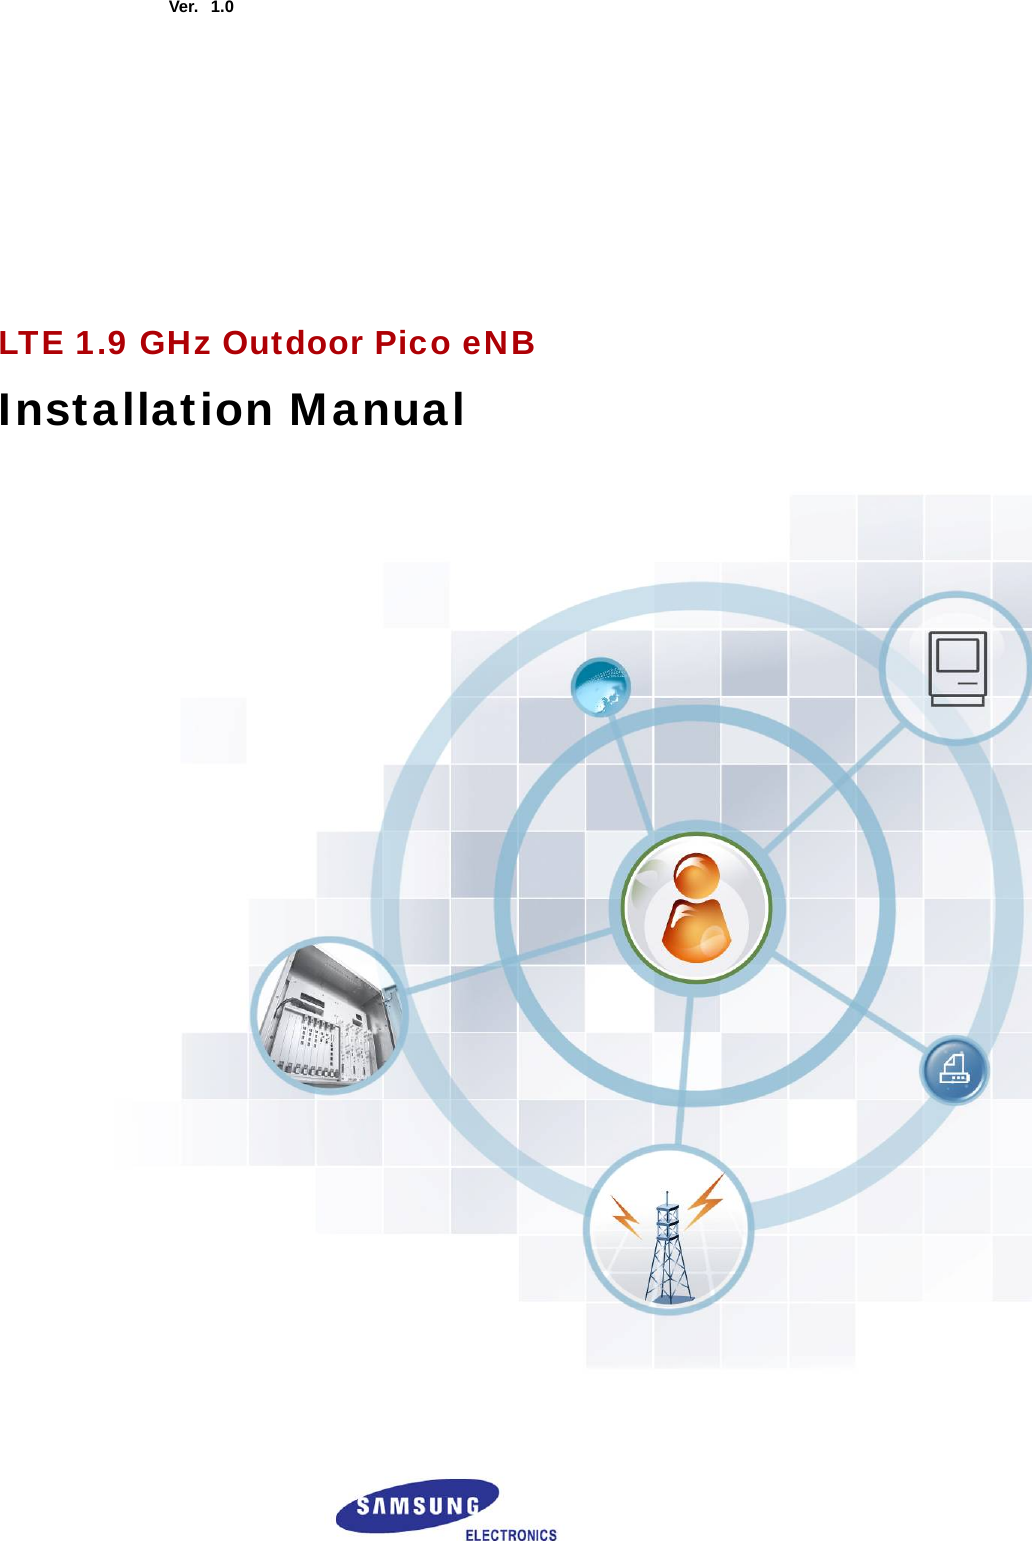  Ver.    1.0        LTE 1.9 GHz Outdoor Pico eNB Installation Manual    